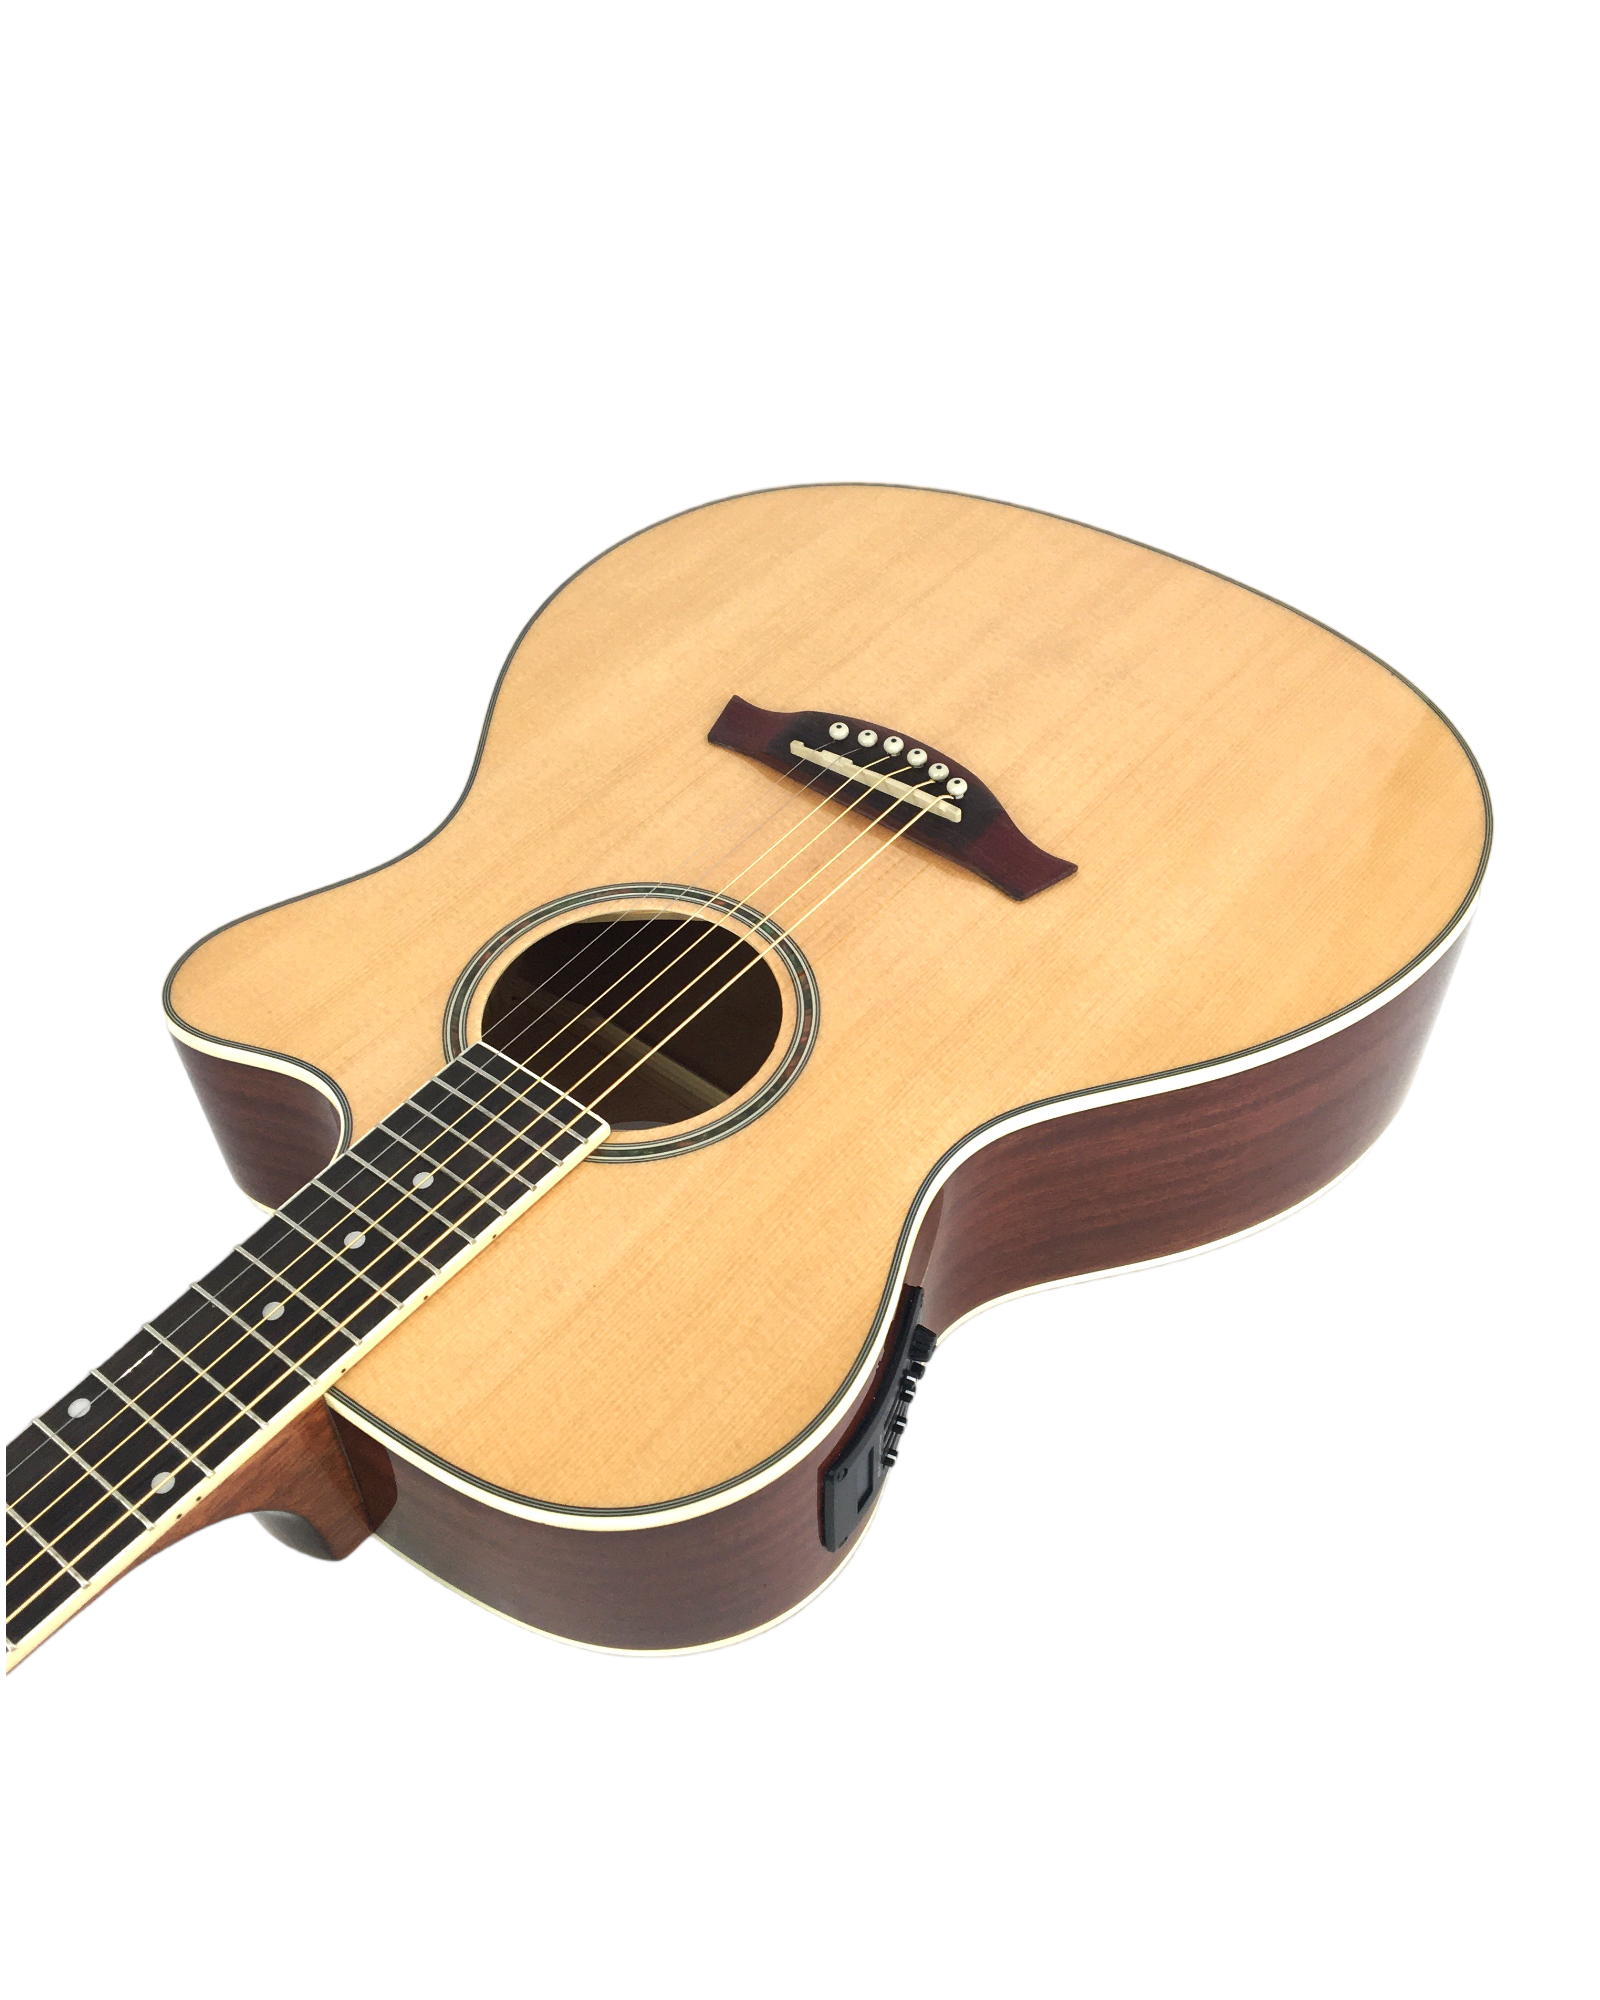 Haze Spruce Top Built-In Pickup/Tuner OM Cutaway Acoustic Guitar - Natural F560CEQN